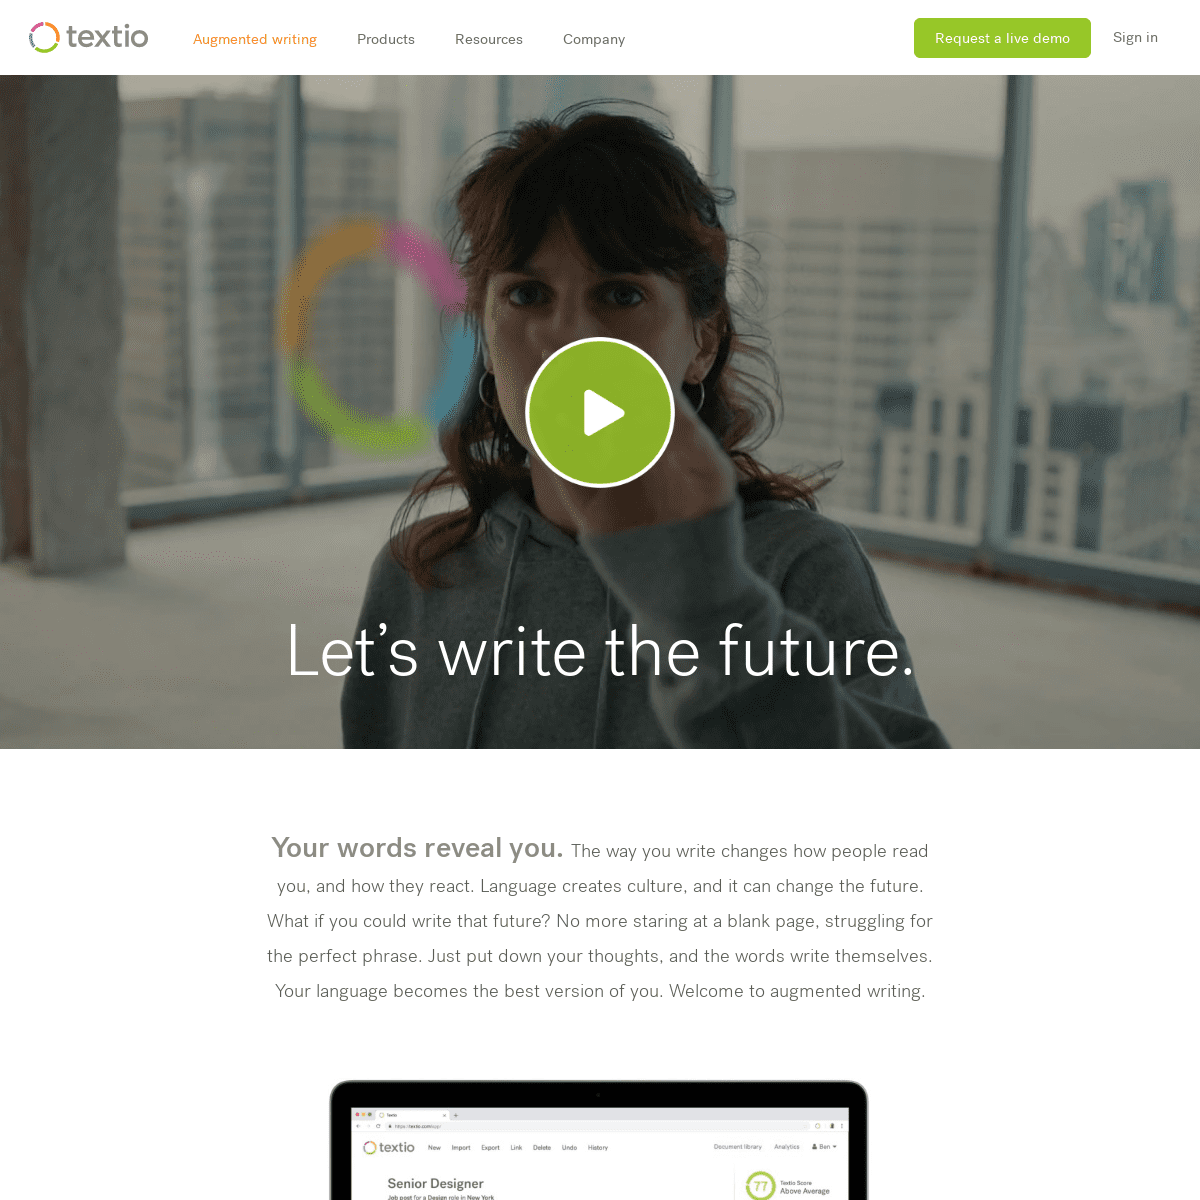 Textio | The augmented writing platform